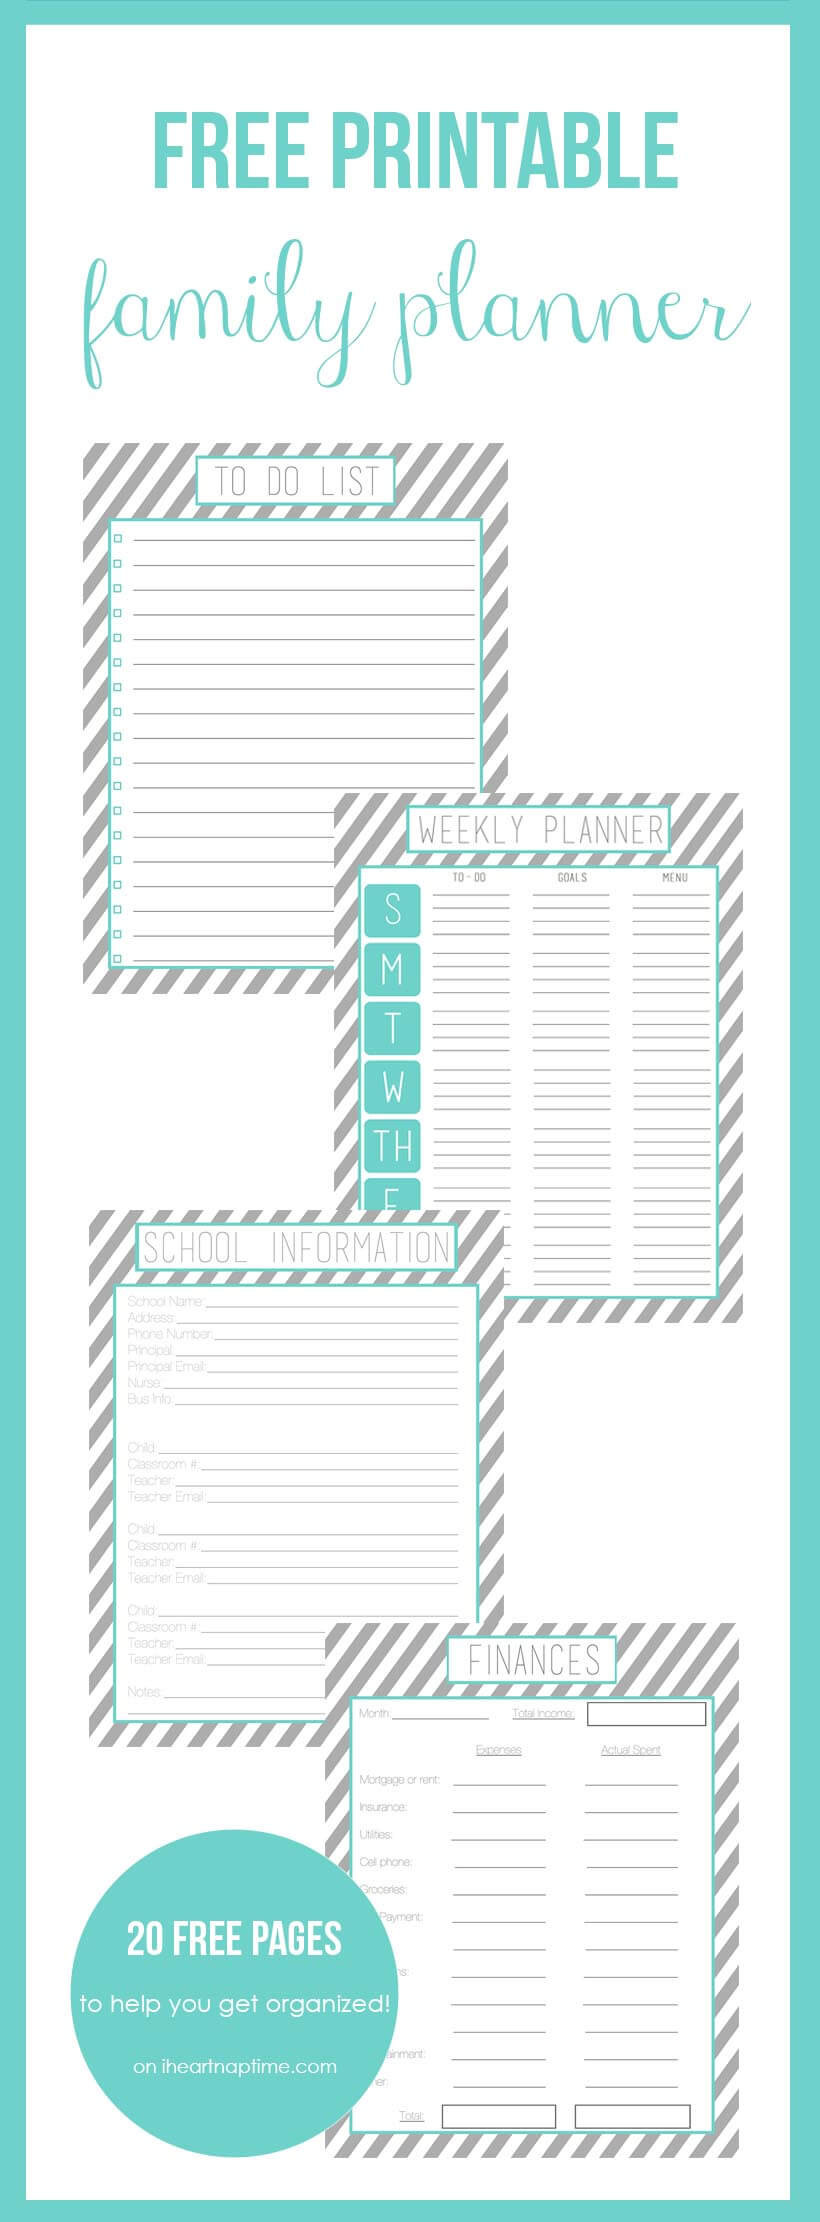 Family Planner Organizer
 2015 free printable family planner I Heart Nap Time